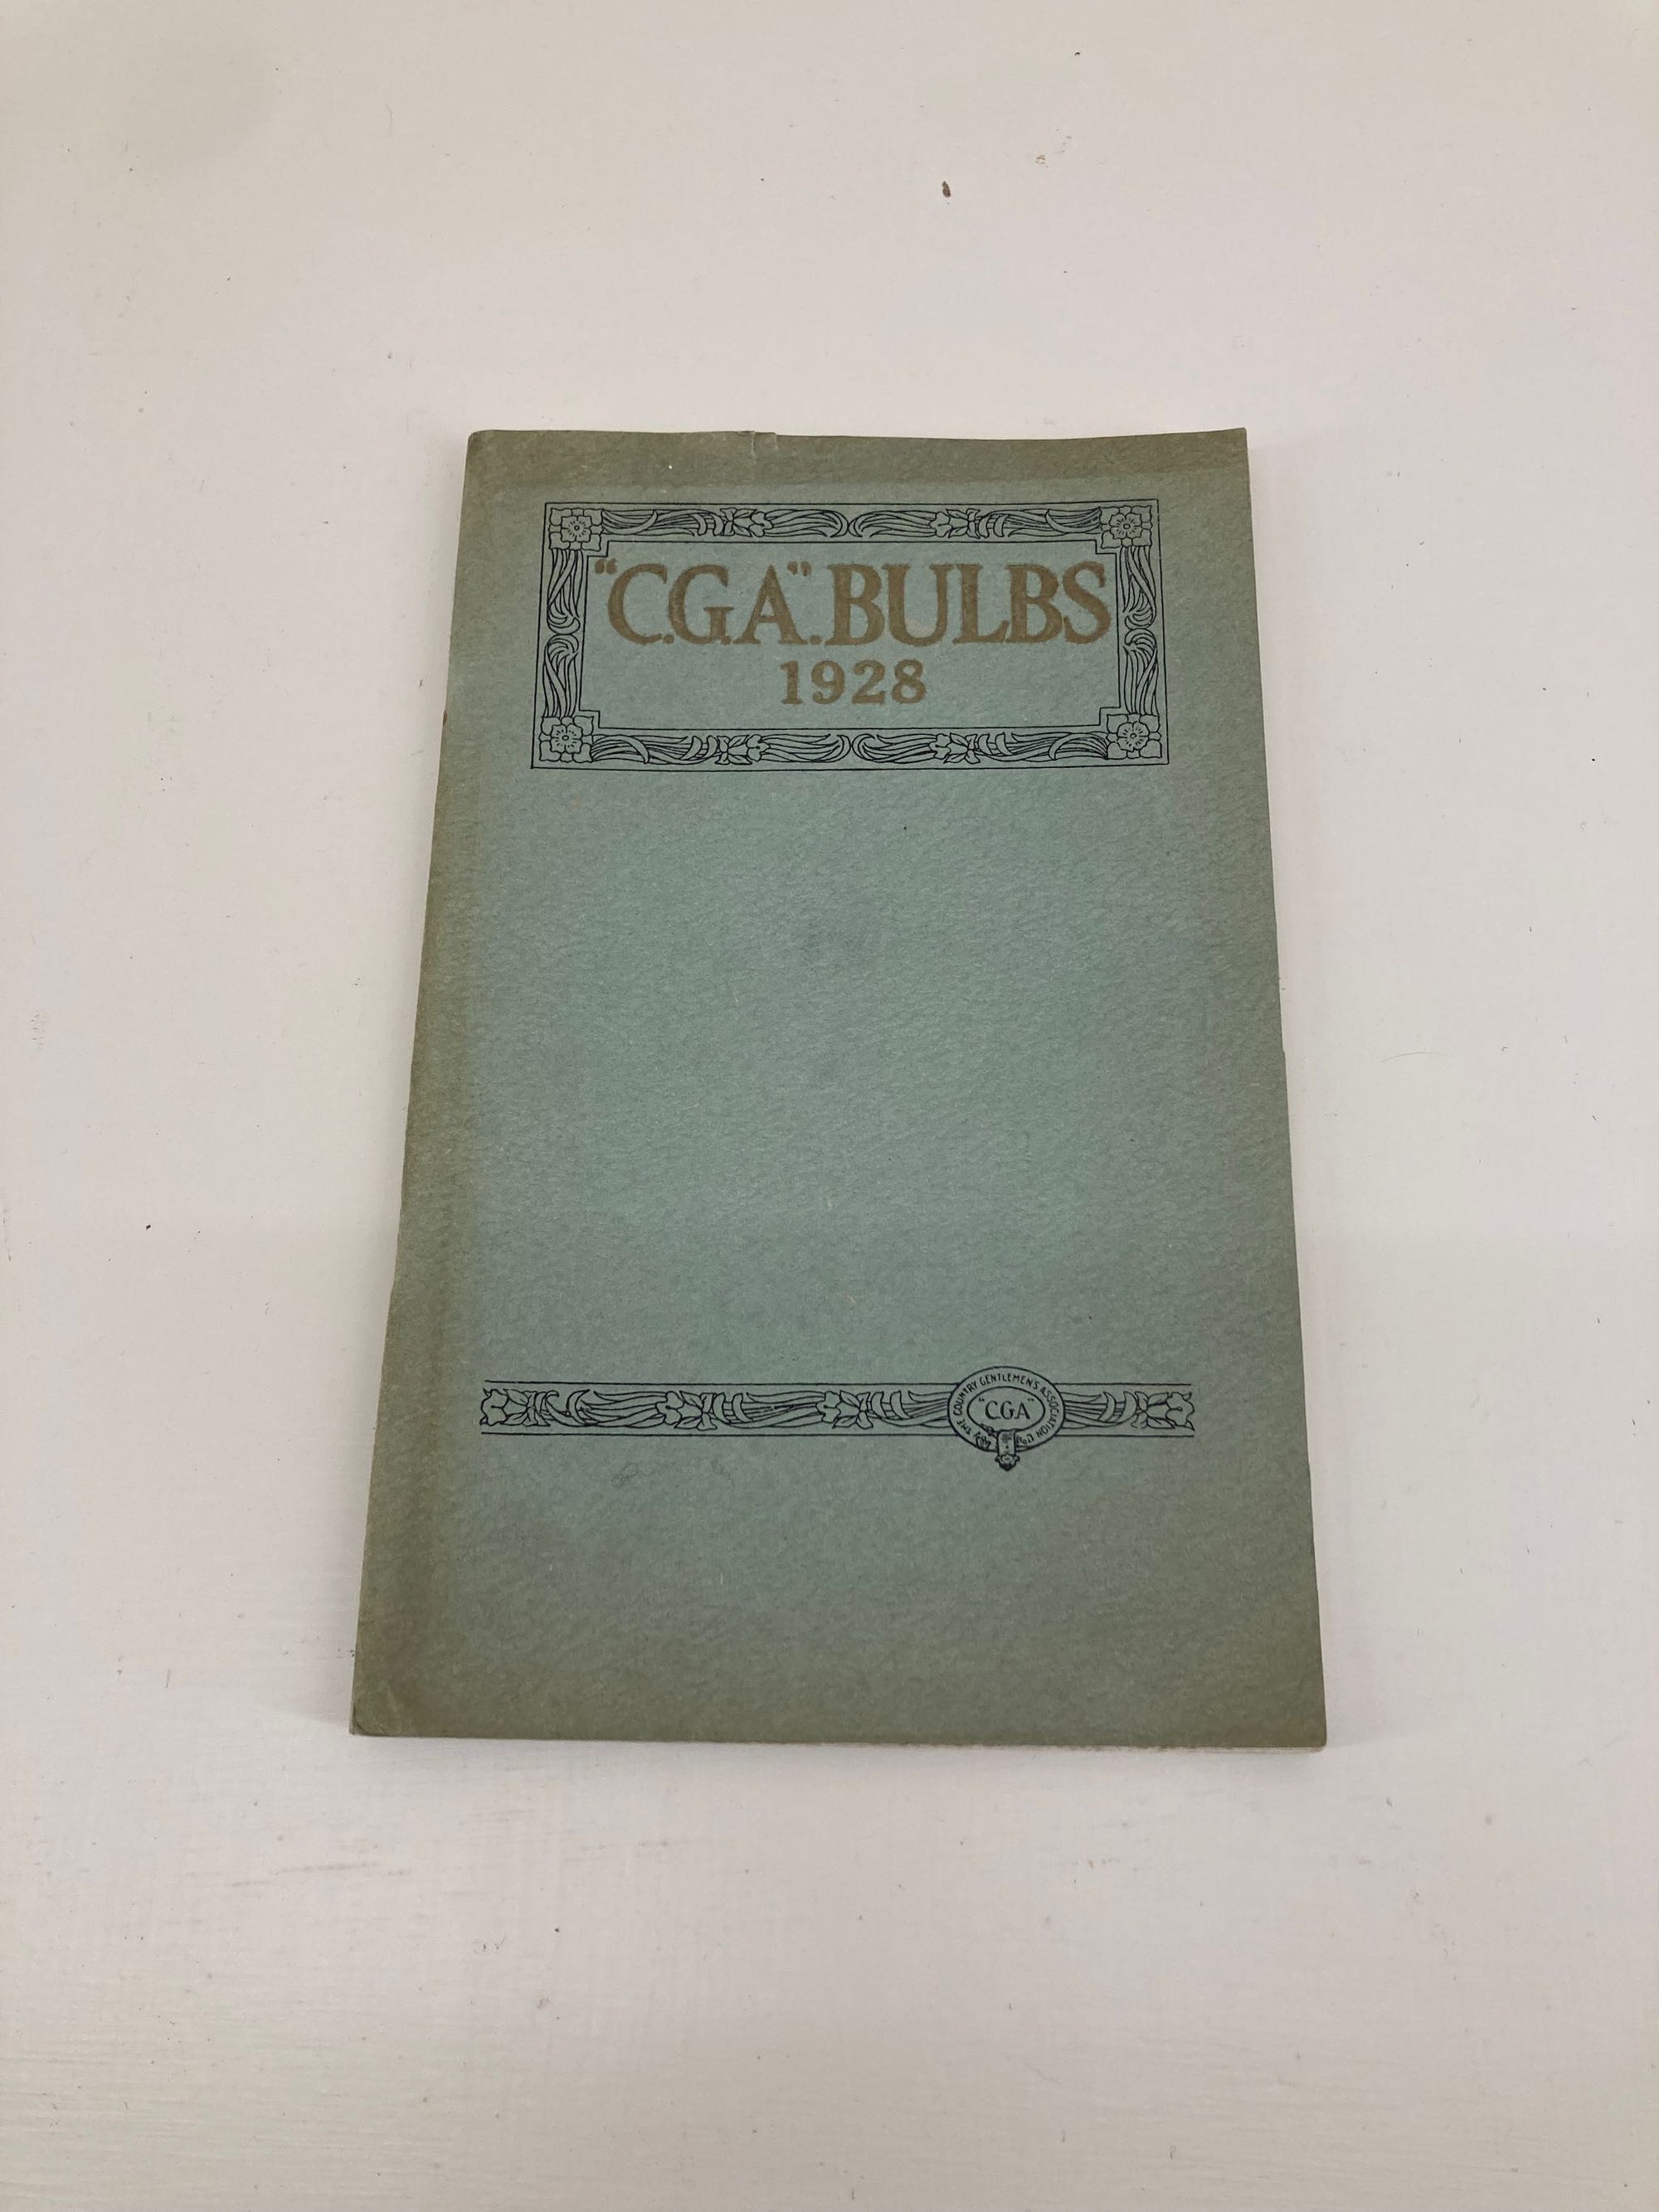 CGA Bulb Catalogue for 1928